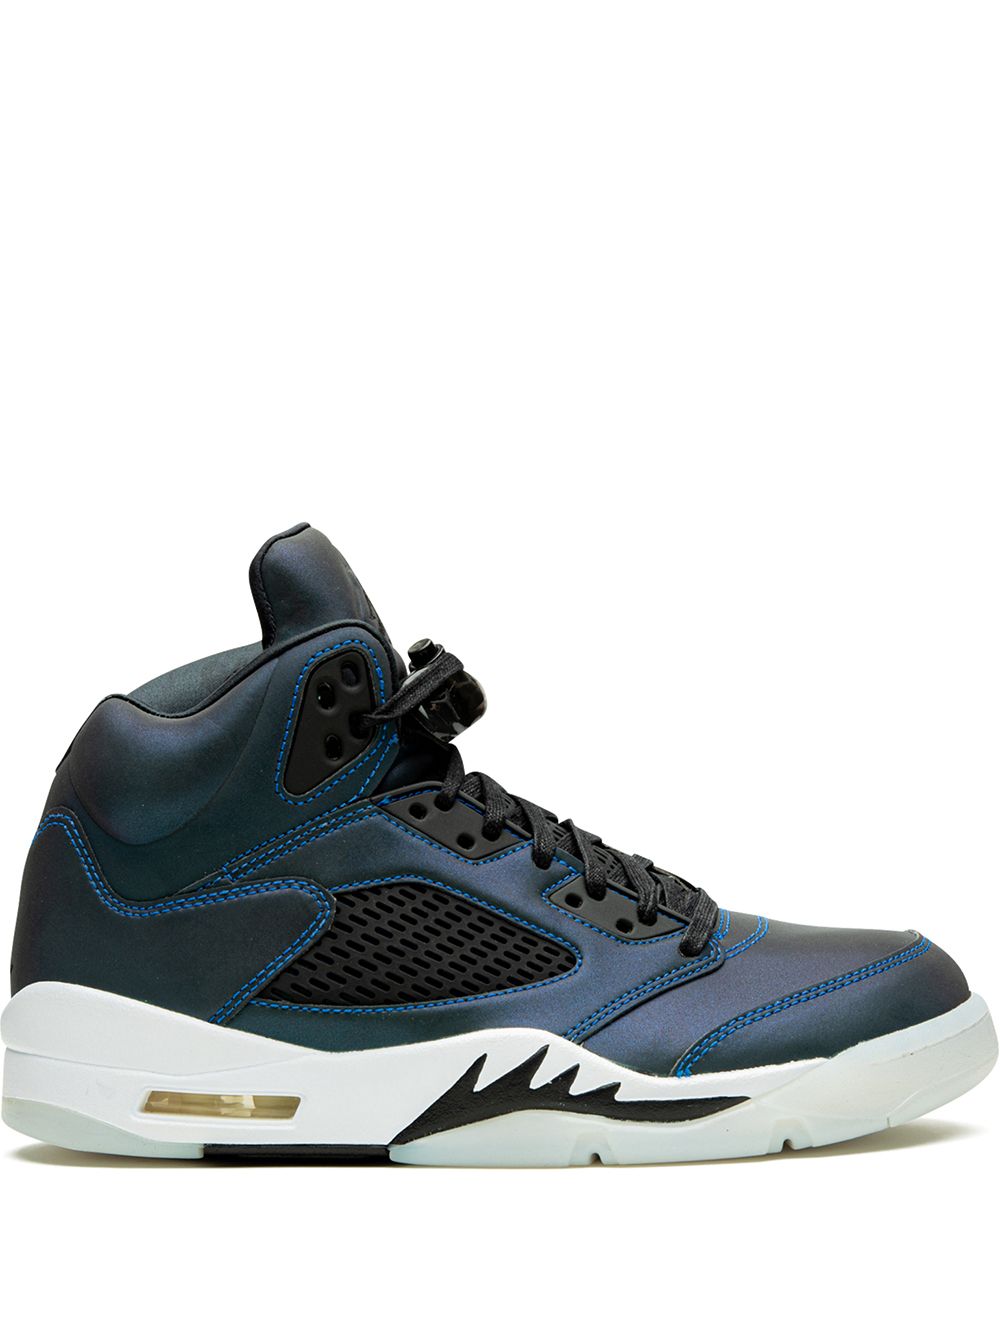 Jordan Air Jordan 5 Retro "Oil Grey" sneakers - Blue